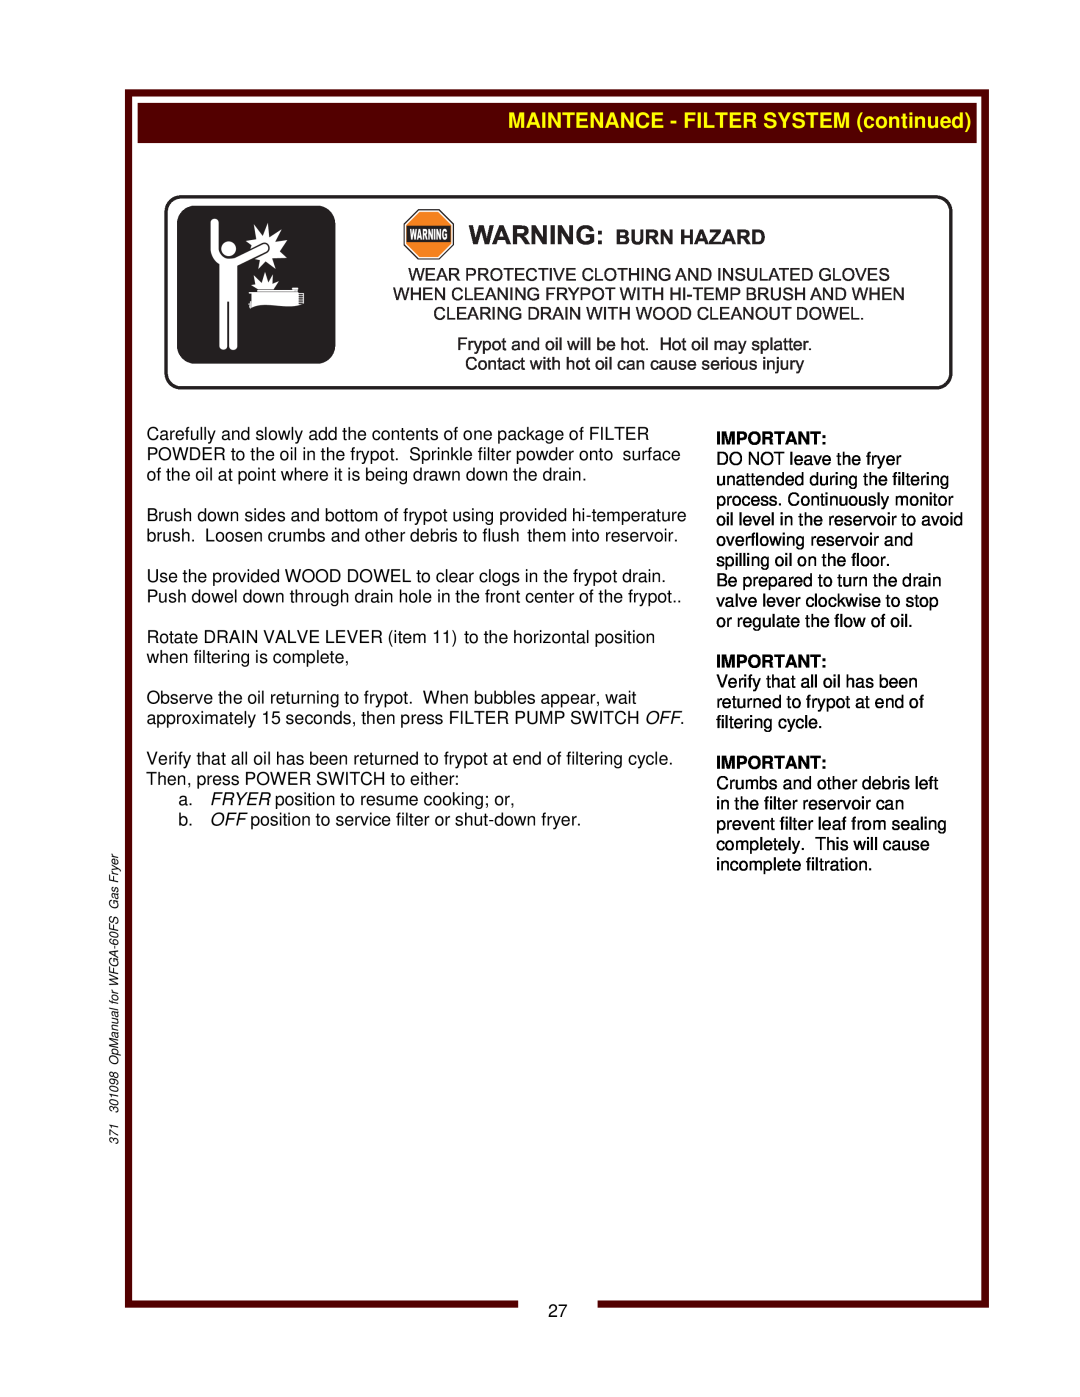 Wells WFGA-60FS operation manual Warning Warning Burn Hazard, Frypot and oil will be hot. Hot oil may splatter 